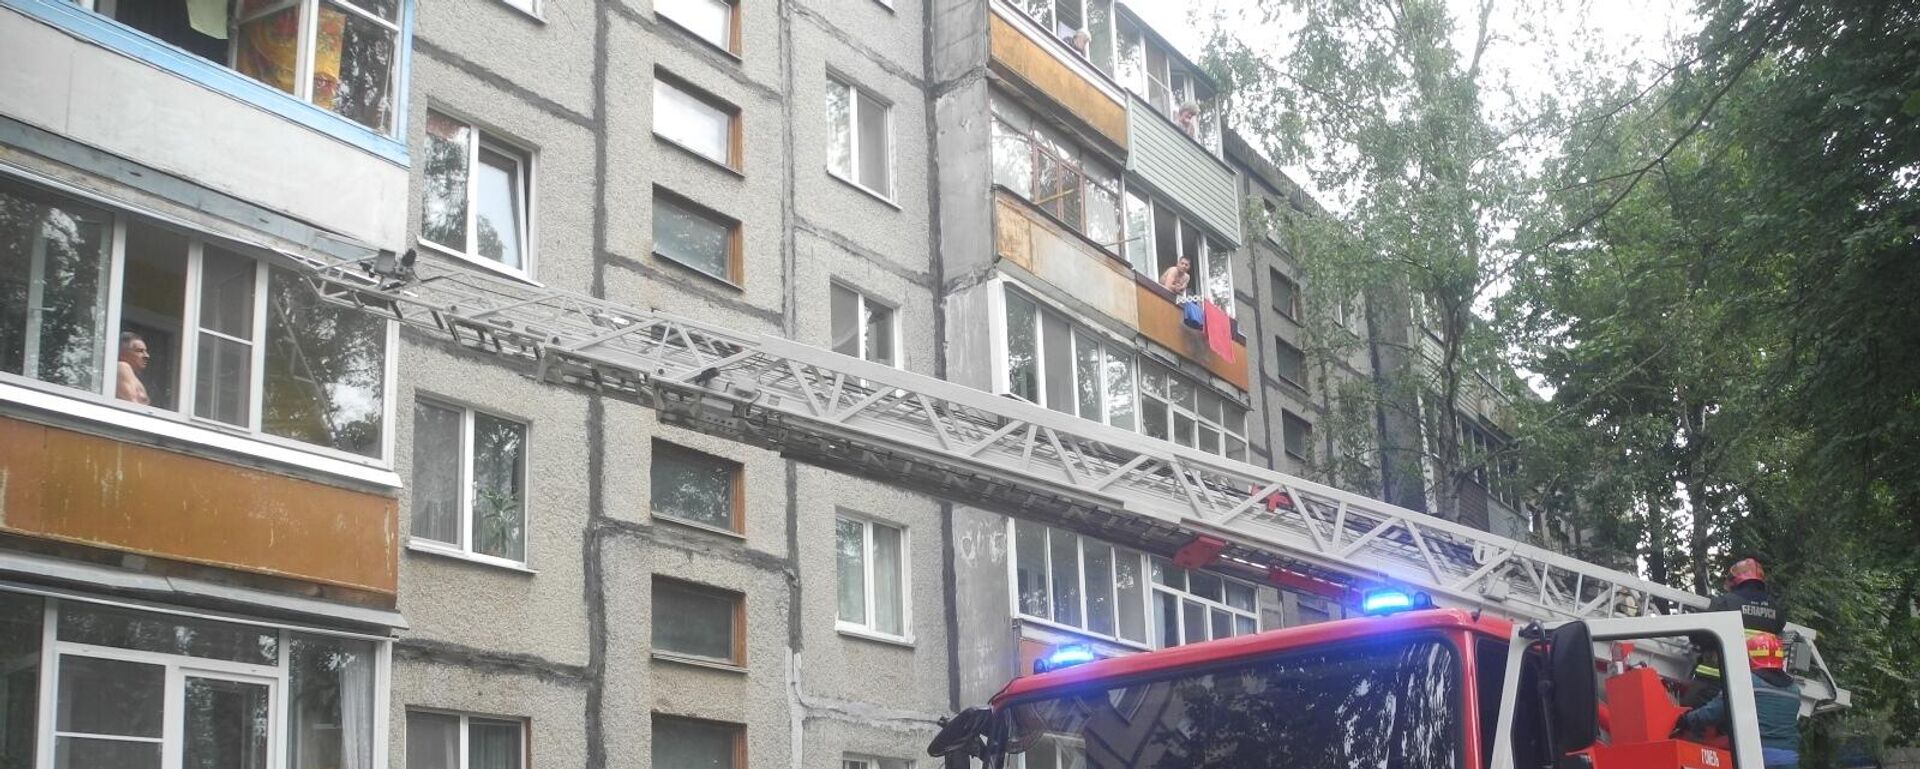 Пенсионер выпал из окна и висел на балконе до приезда спасателей  - Sputnik Беларусь, 1920, 05.07.2021